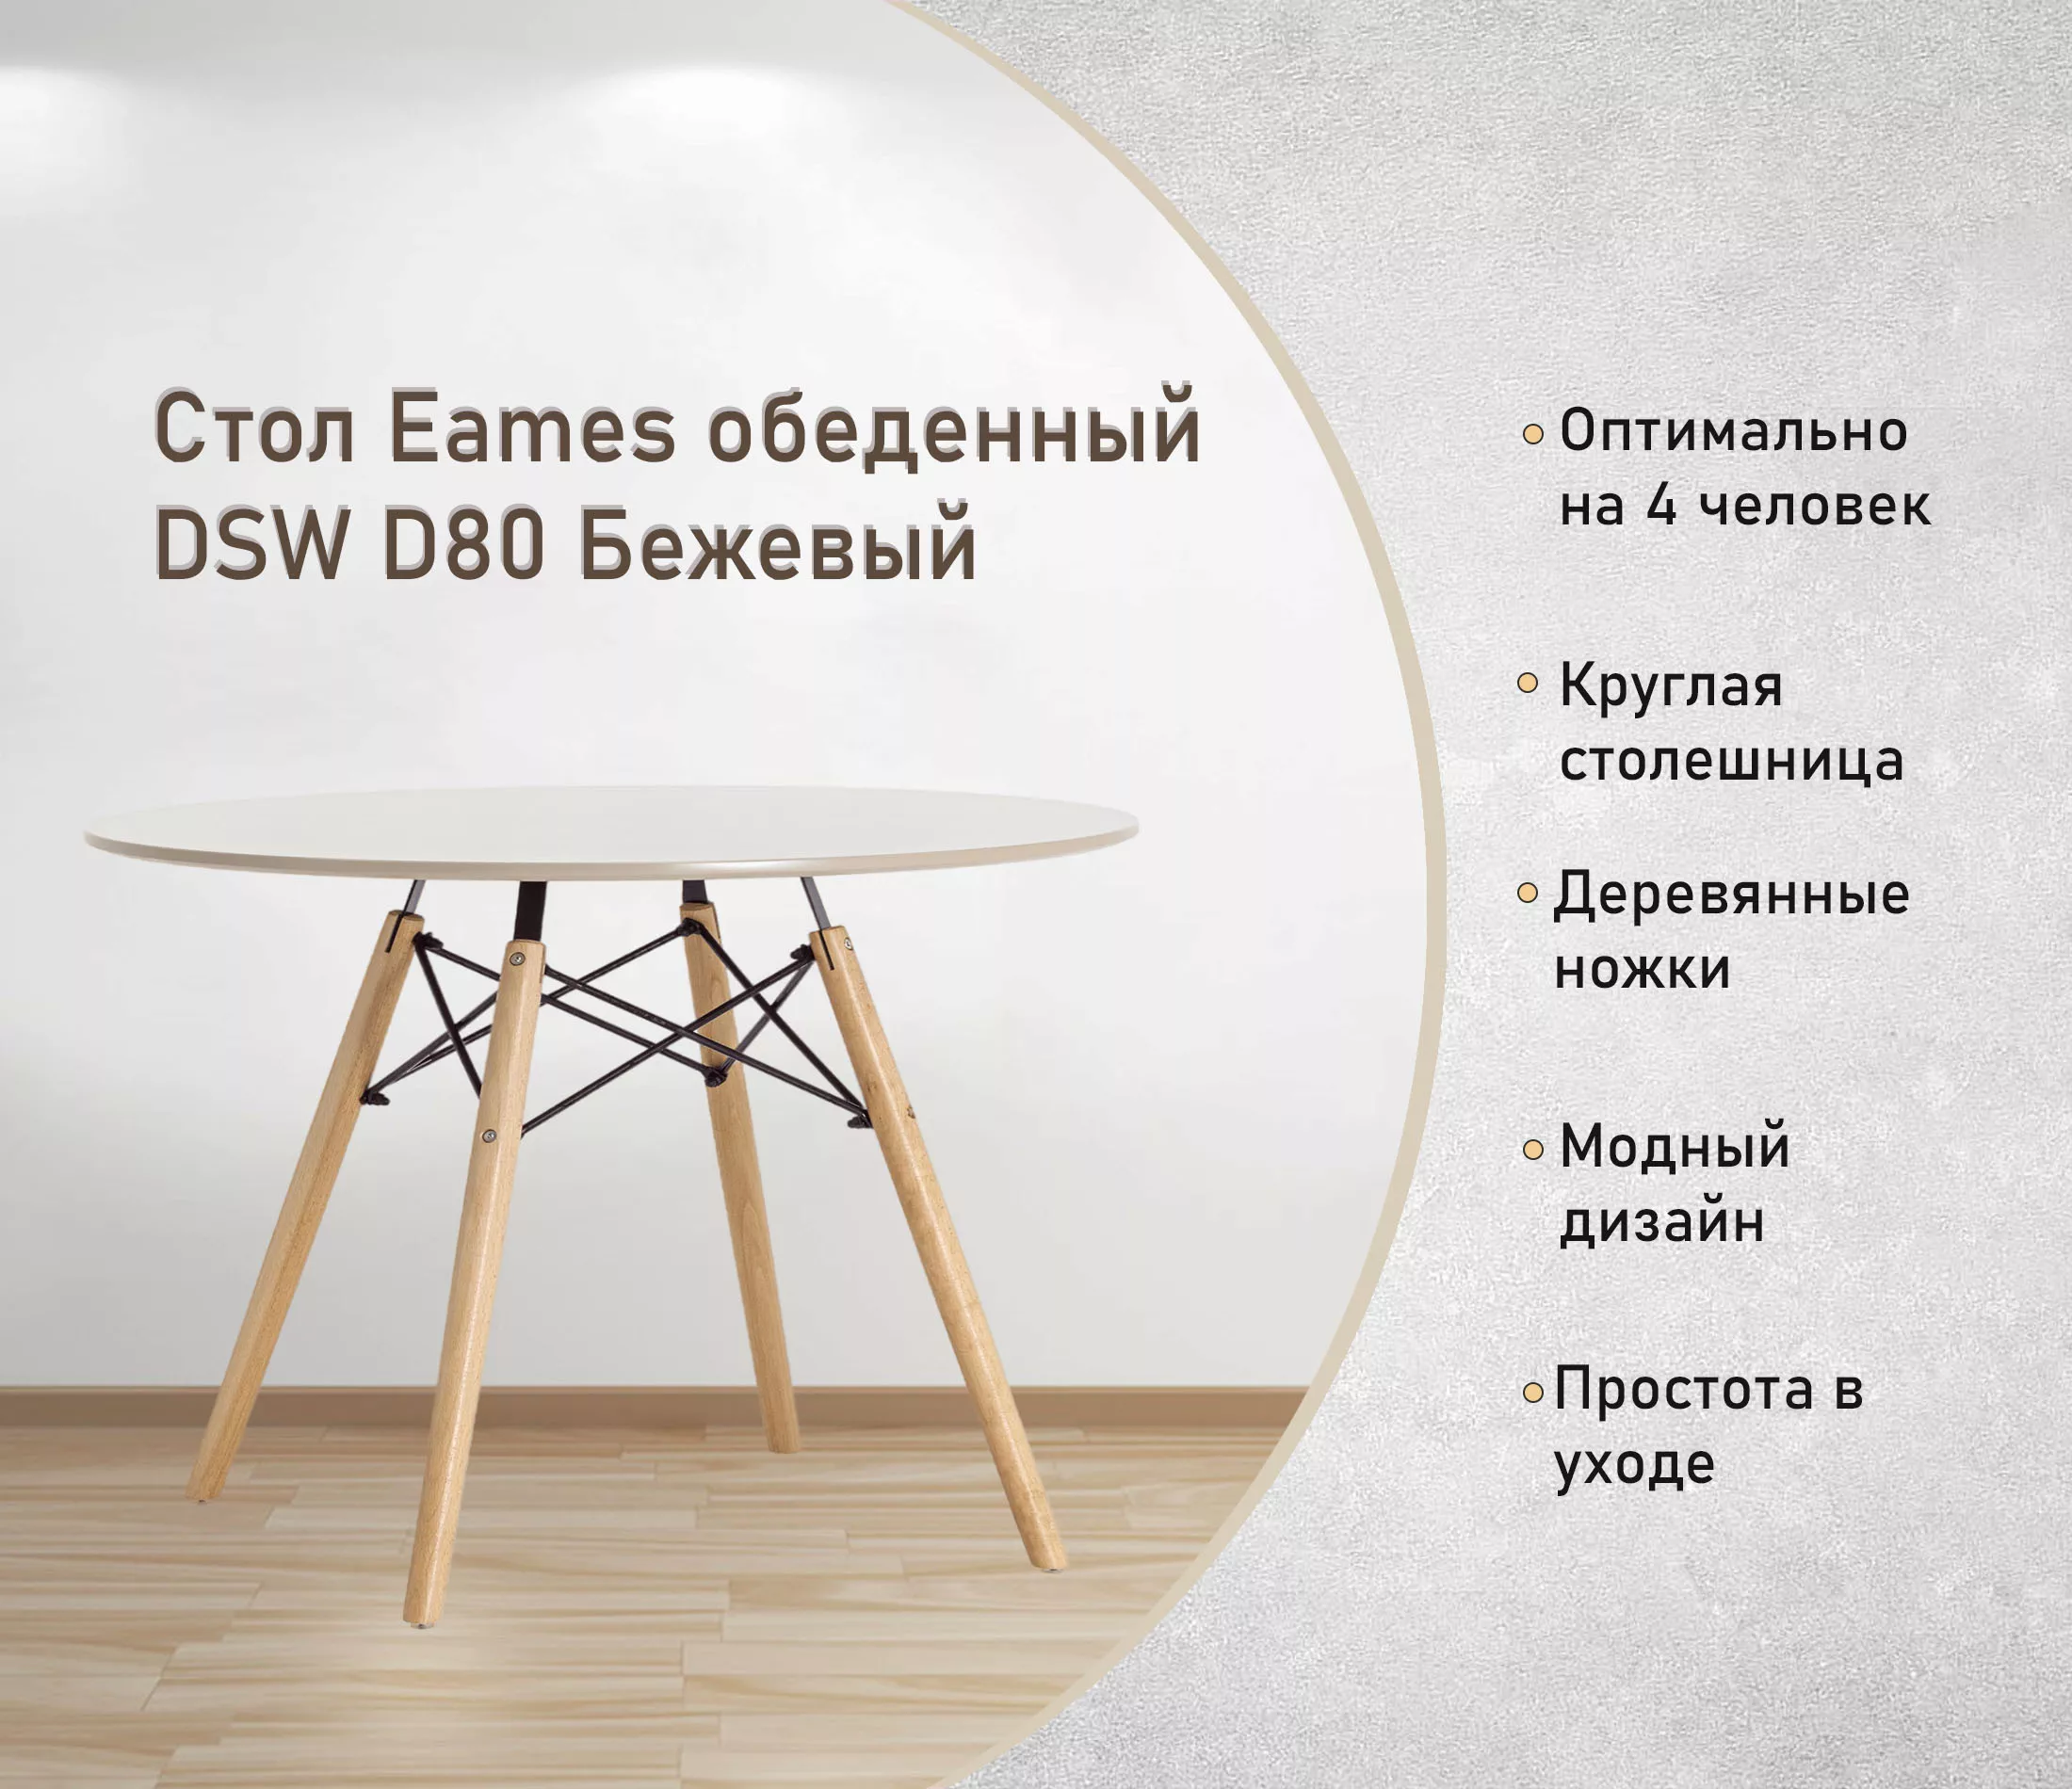 Стол обеденный DSW D80 Бежевый круглый